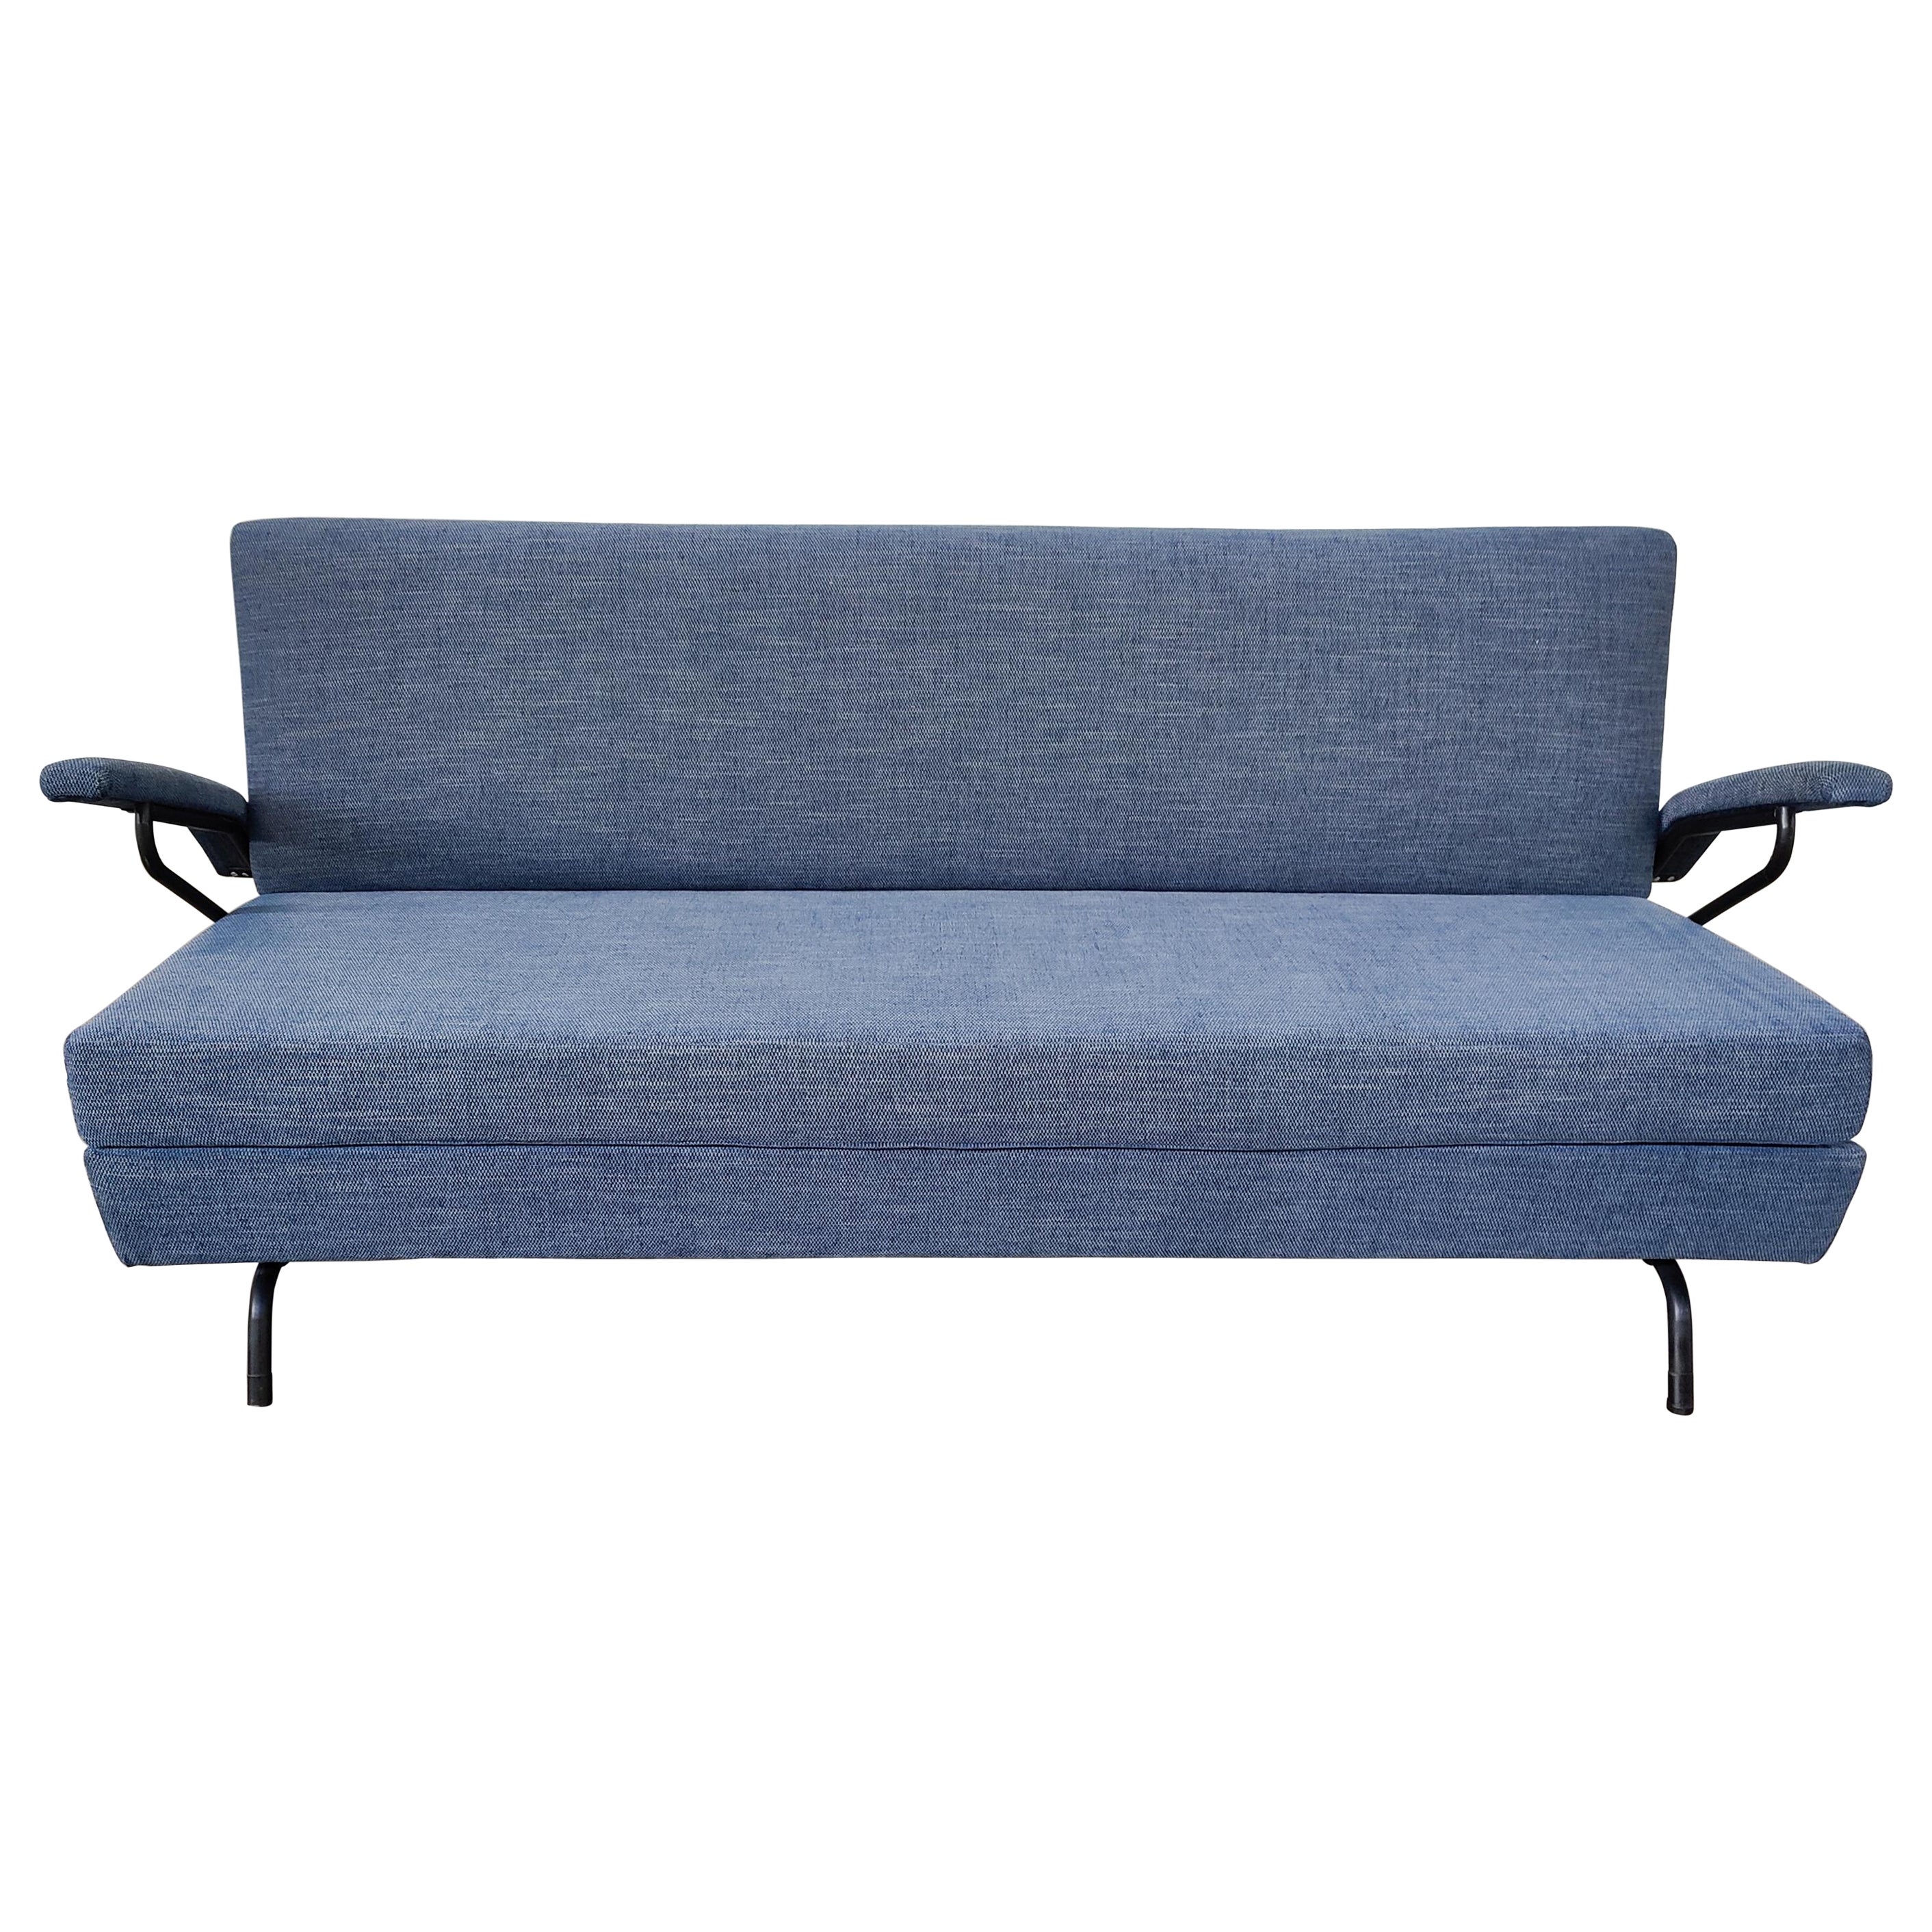 Mid-Century Modern Italian Sofa Bed, 1960s, New Upholstery